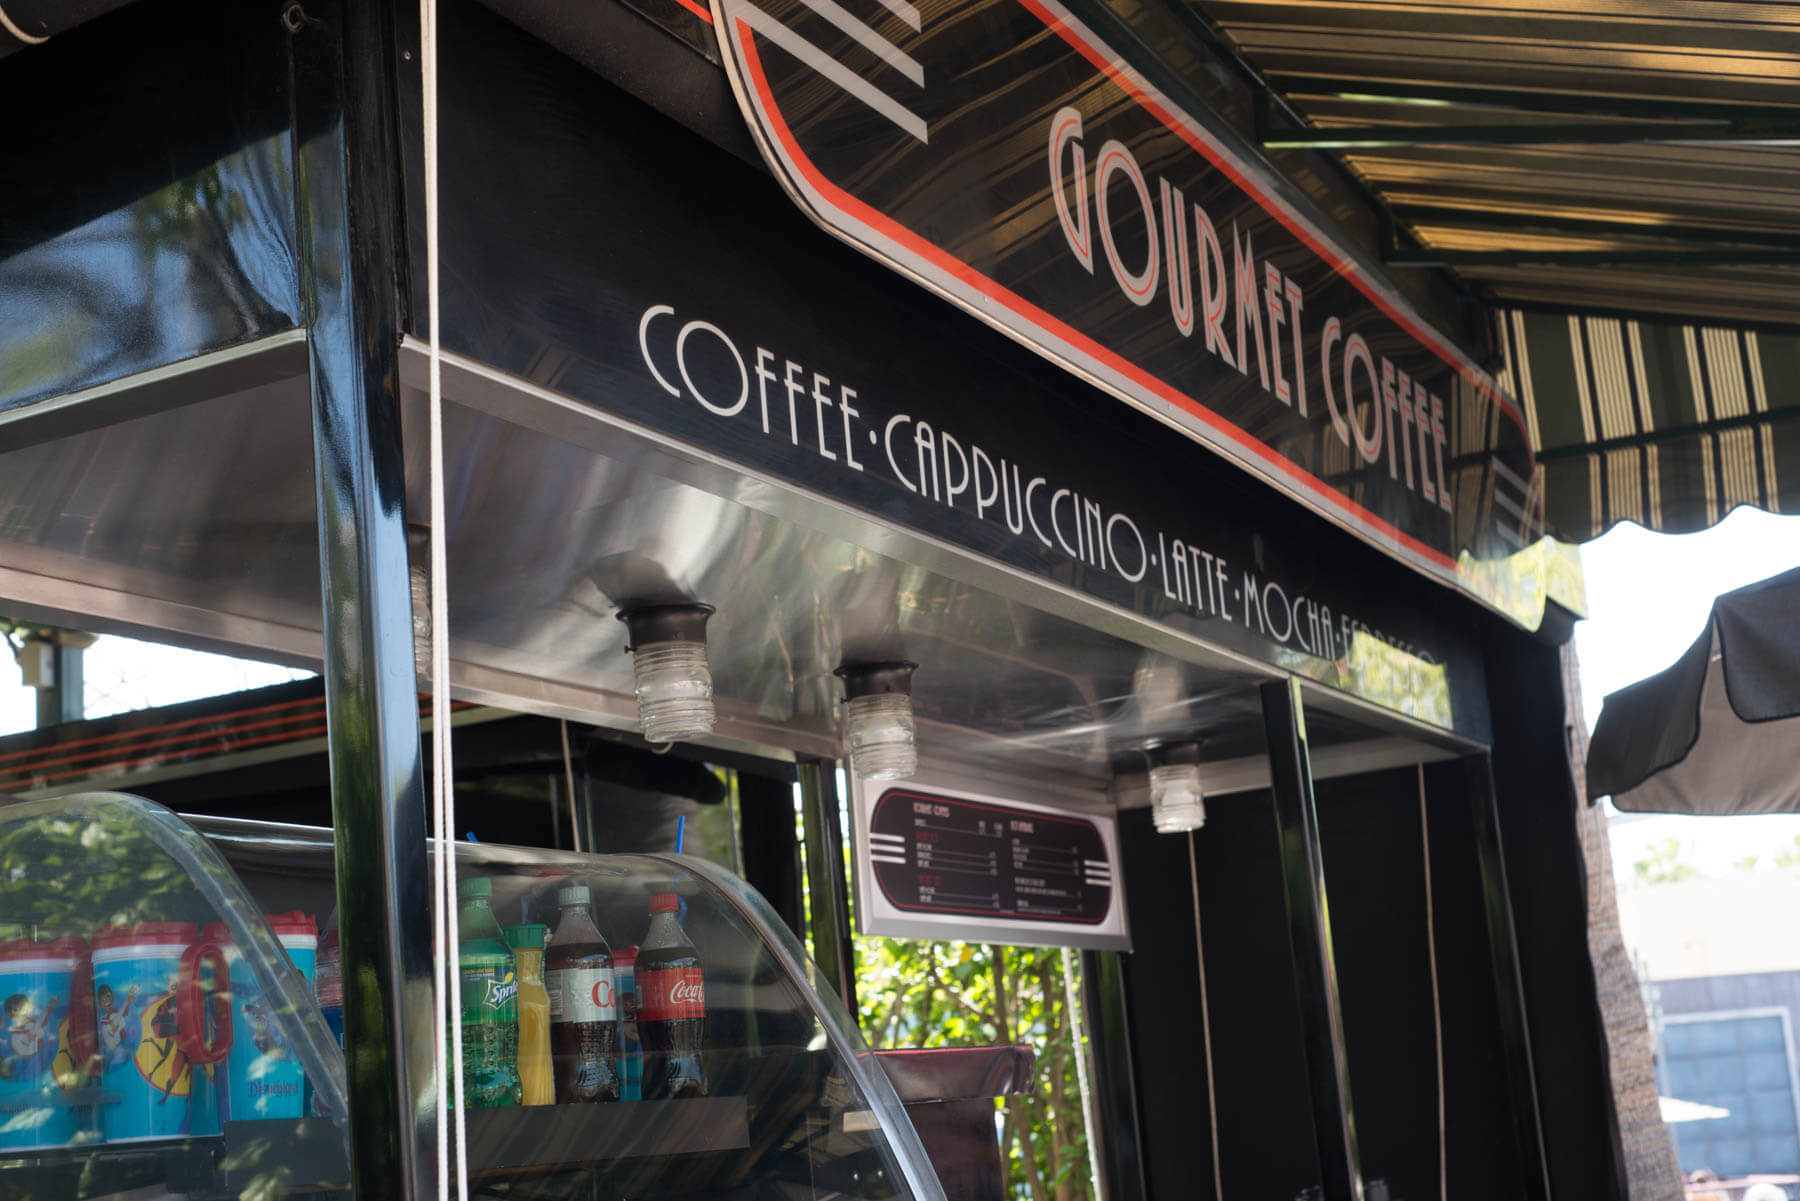 Gourmet Cappuccino Cart near Pixar Pier in California Adventure | Where to Find Good Coffee at Disneyland